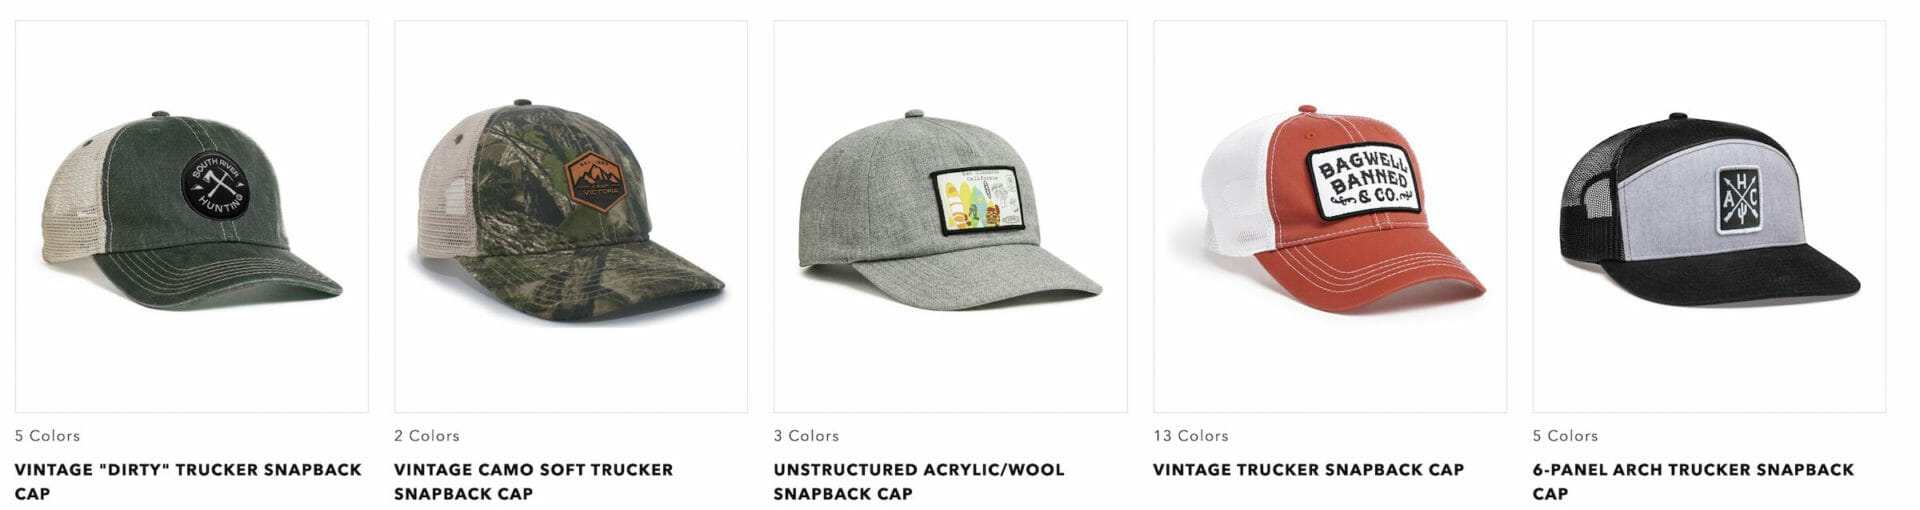 snapback hats with logos